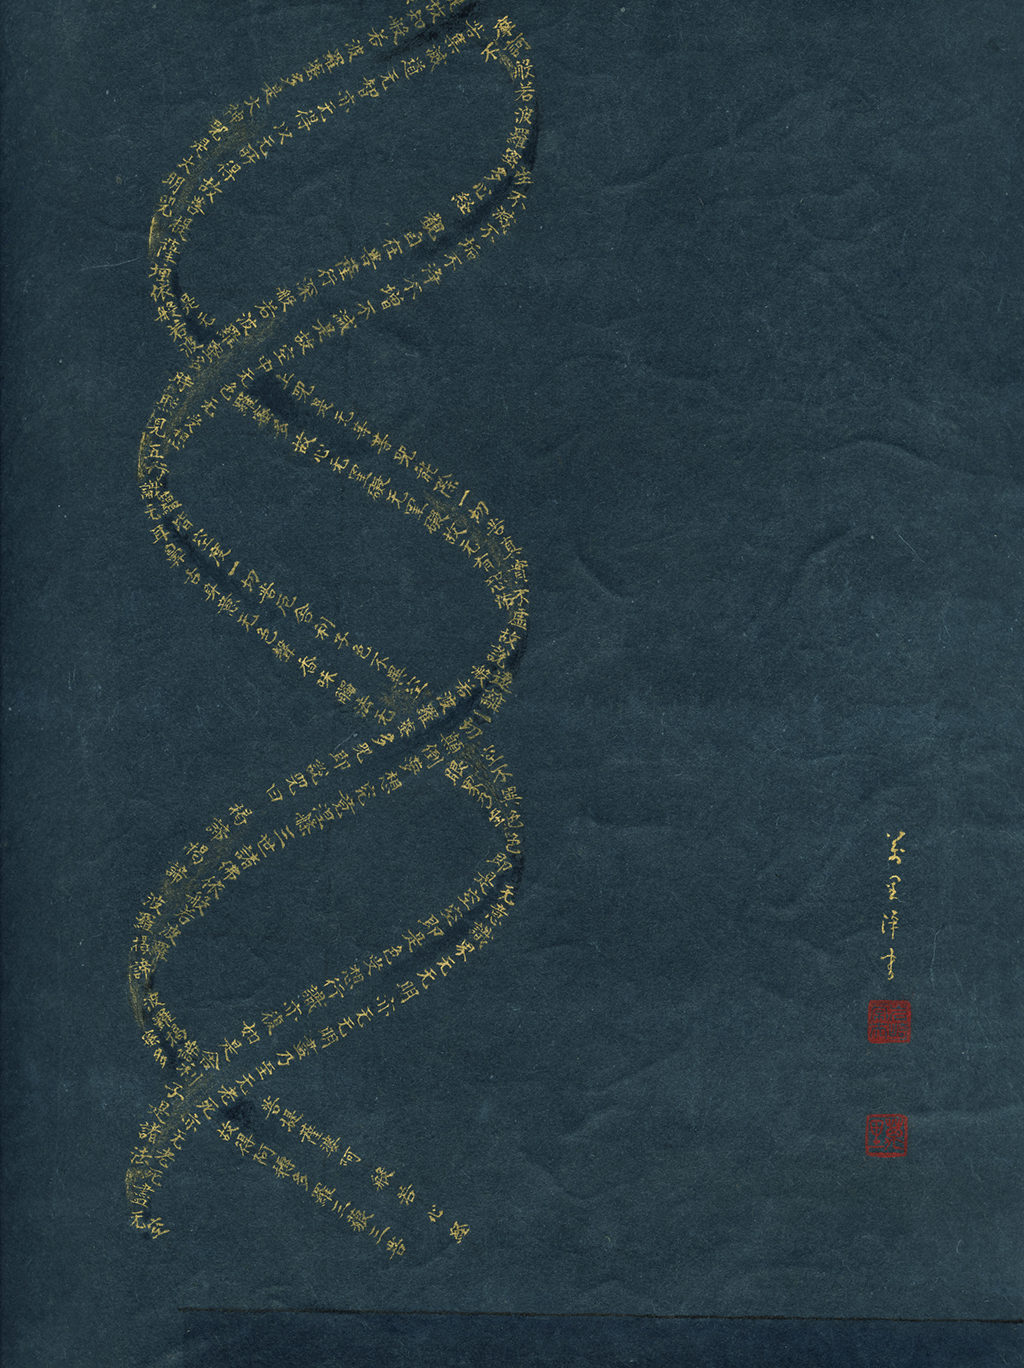 Iwasaki Tsuneo (1917-2002), DNA. Ink and color on paper. Collection of Dr. Paula Arai. Courtesy of Dr. Paula Arai.